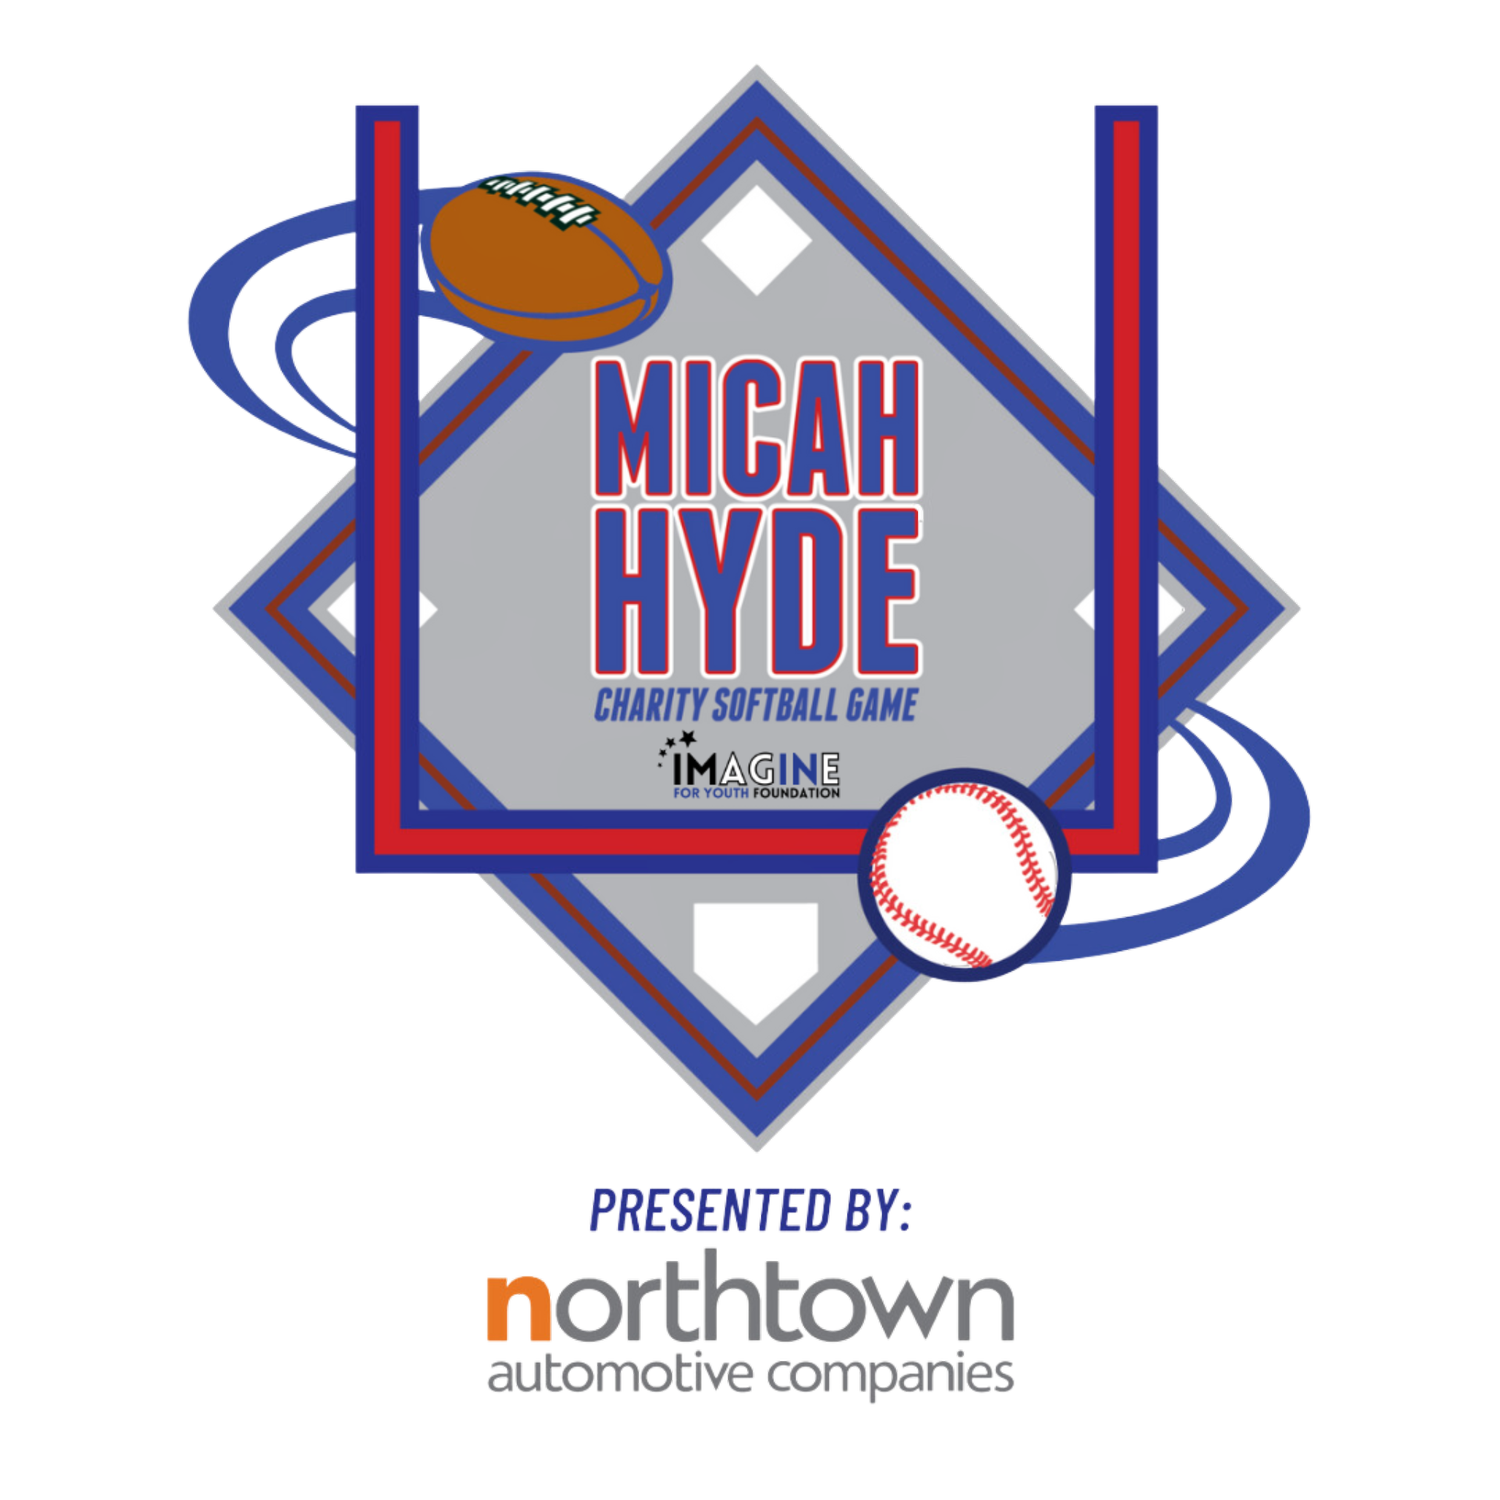 Micah Hyde Charity Softball Game